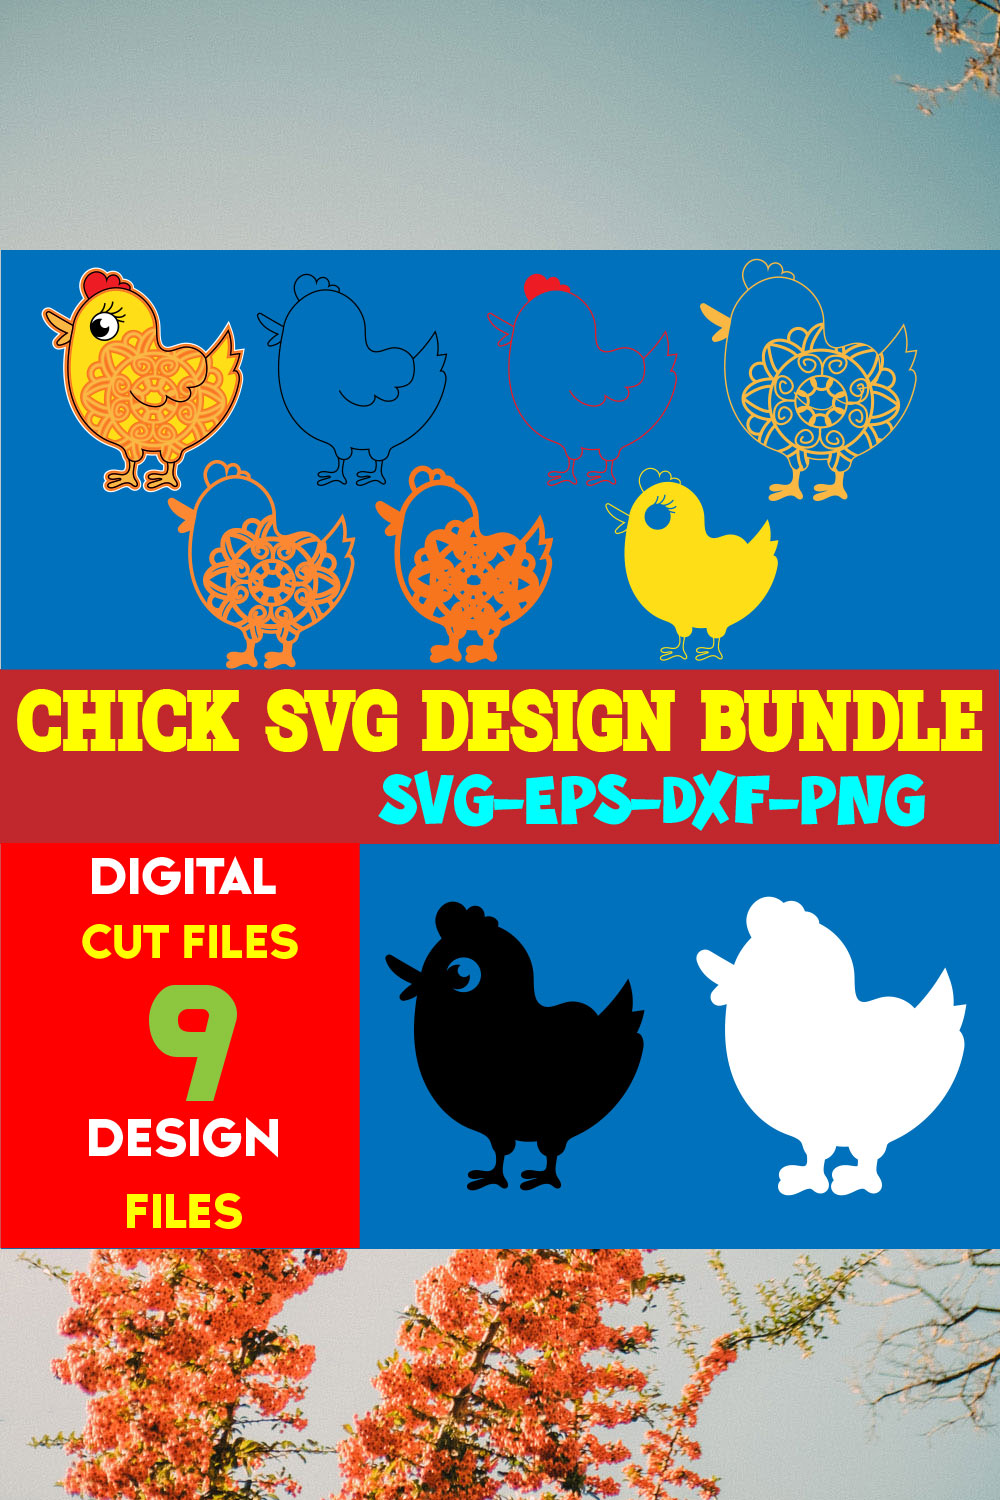 Chick SVG Design Bundle pinterest preview image.